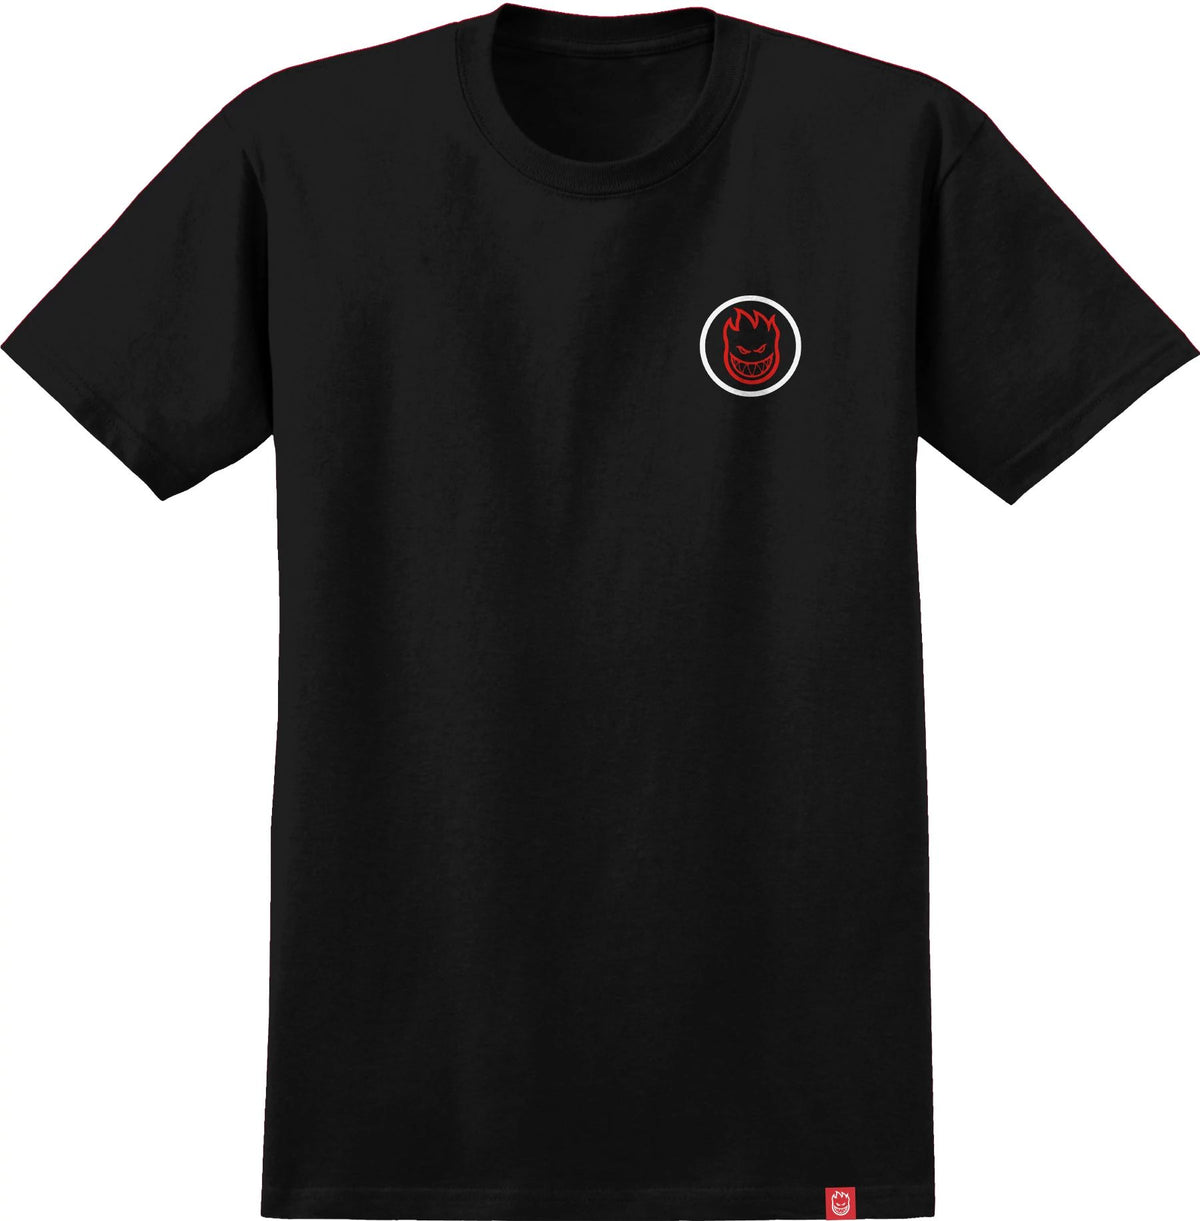 Classic Swirl Fade T-Shirt - Black